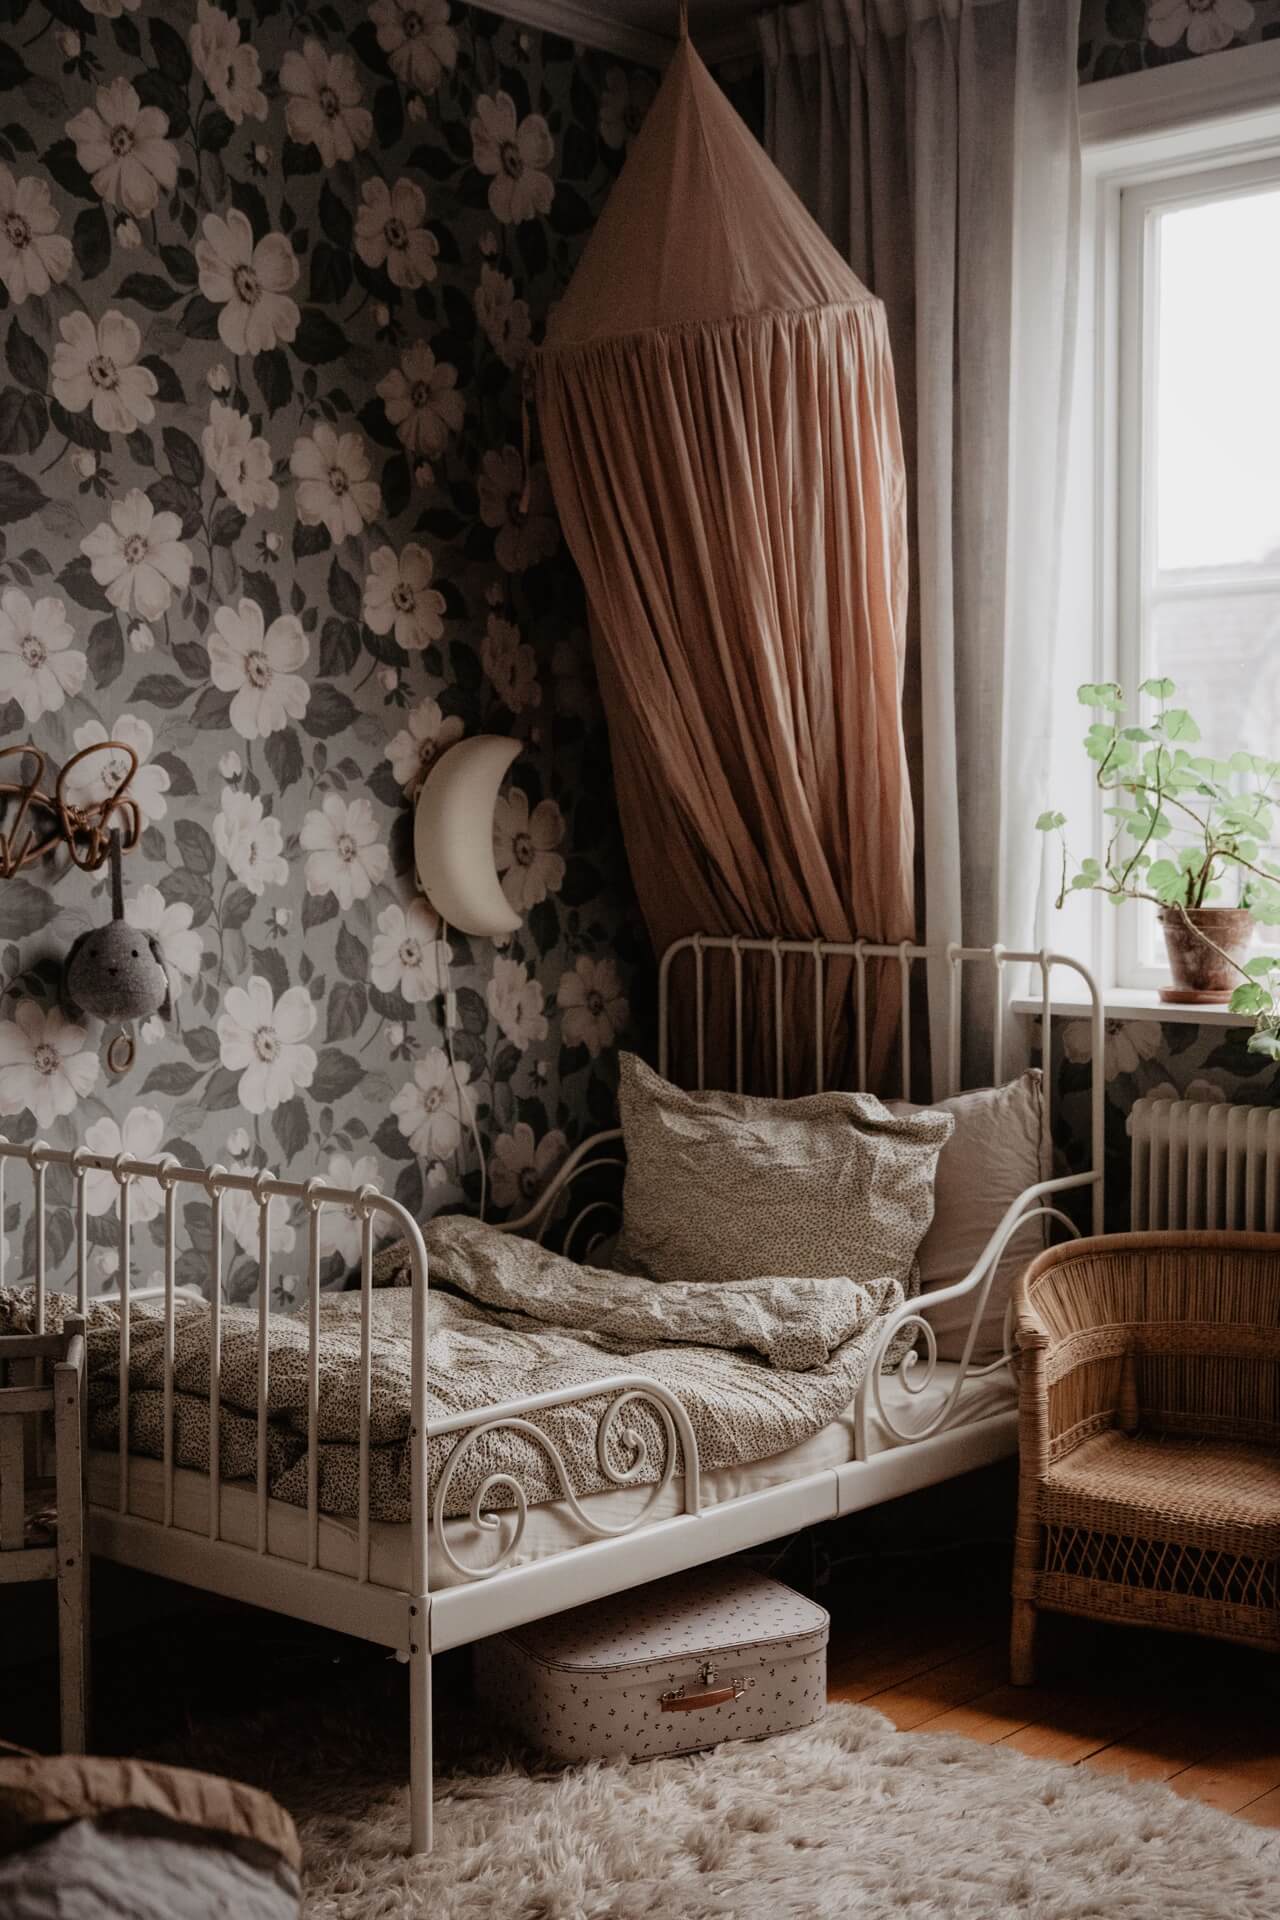 Emelie Sundberg home tour - interior of Swedish home - child's bedroom